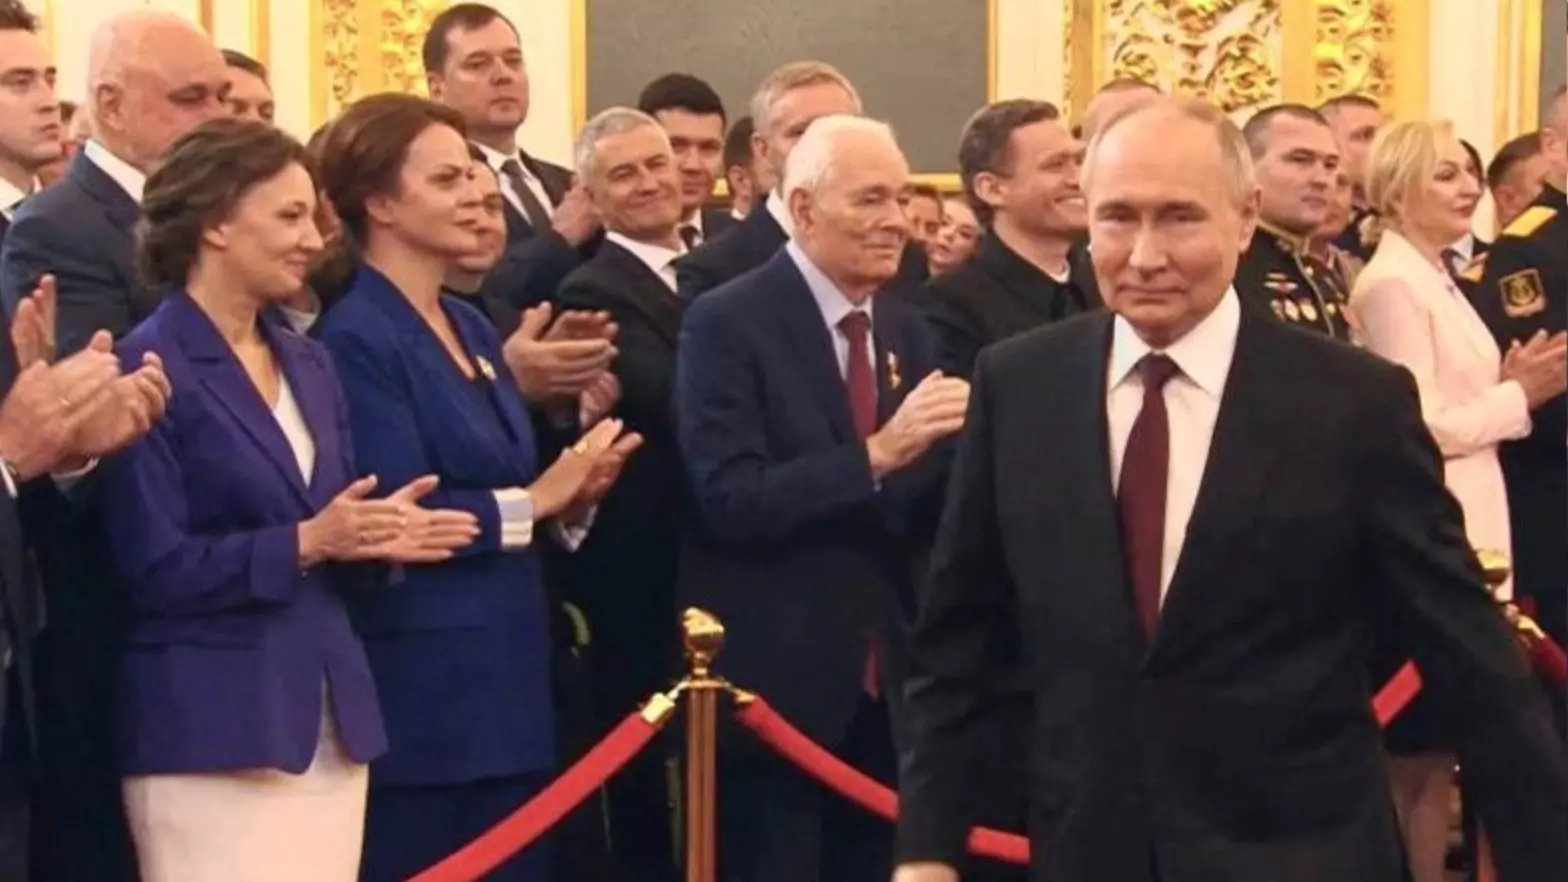 Глава Карелии присутствовал на церемонии инаугурации президента России в Кремле